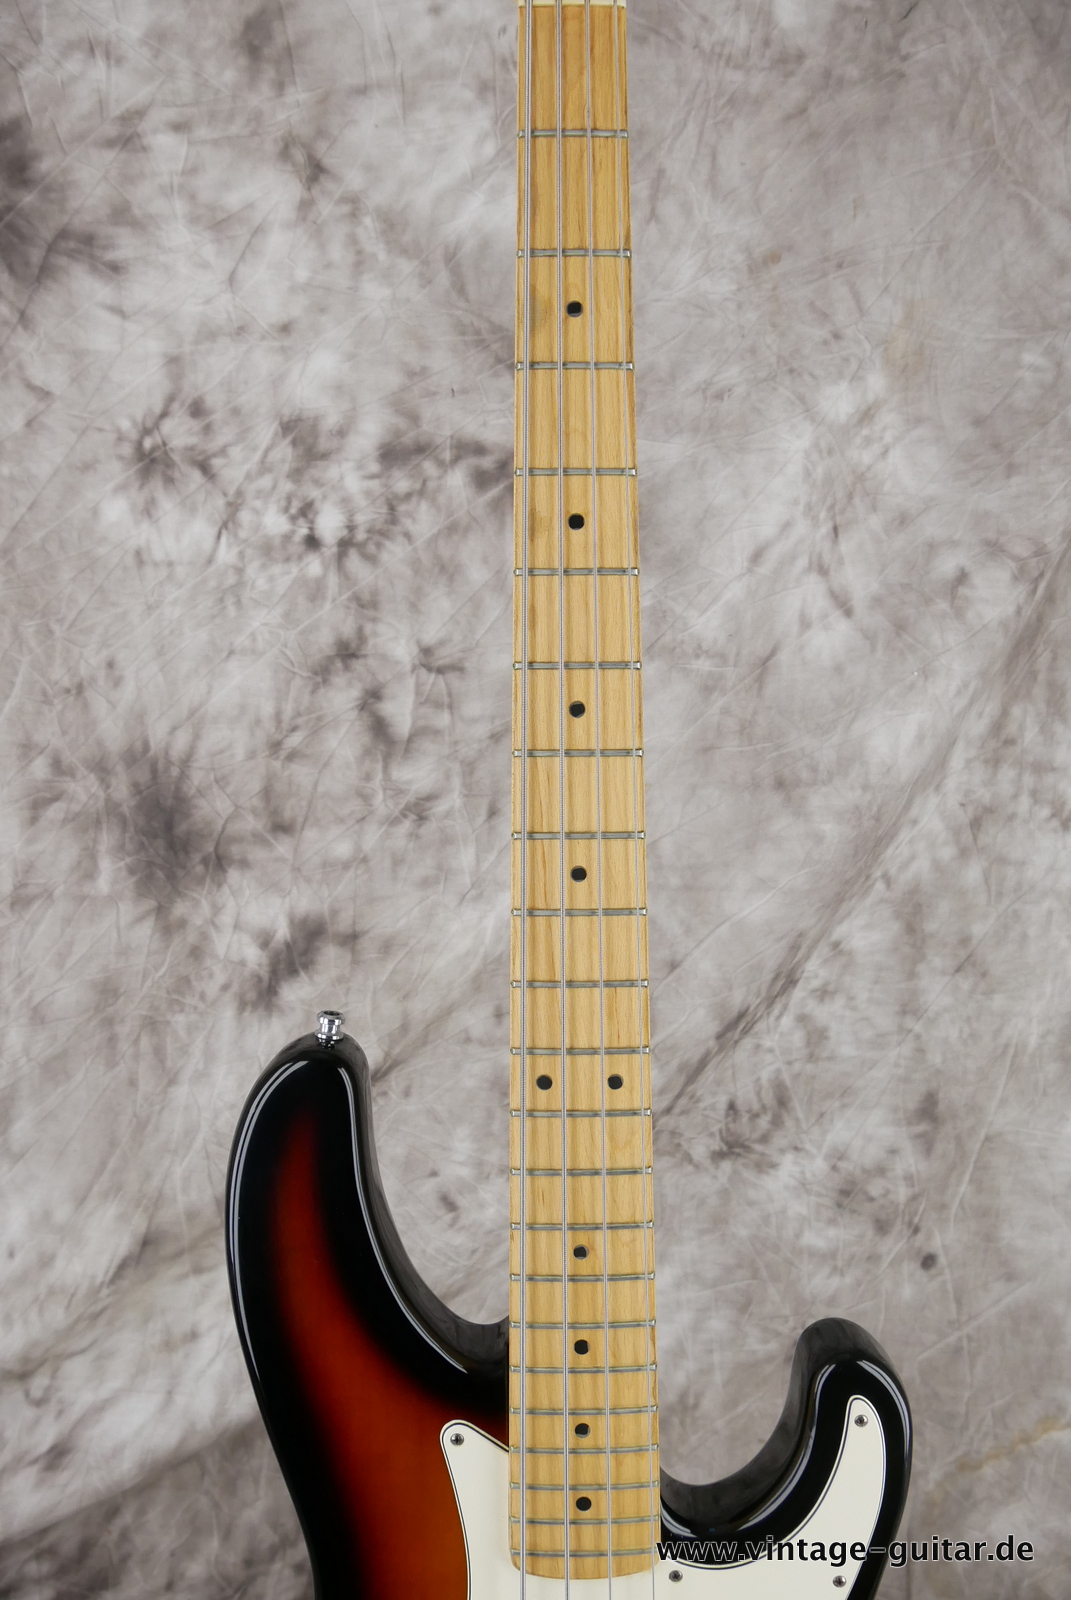 Fender_Precision_plus_USA_sunburst_1992-011.JPG